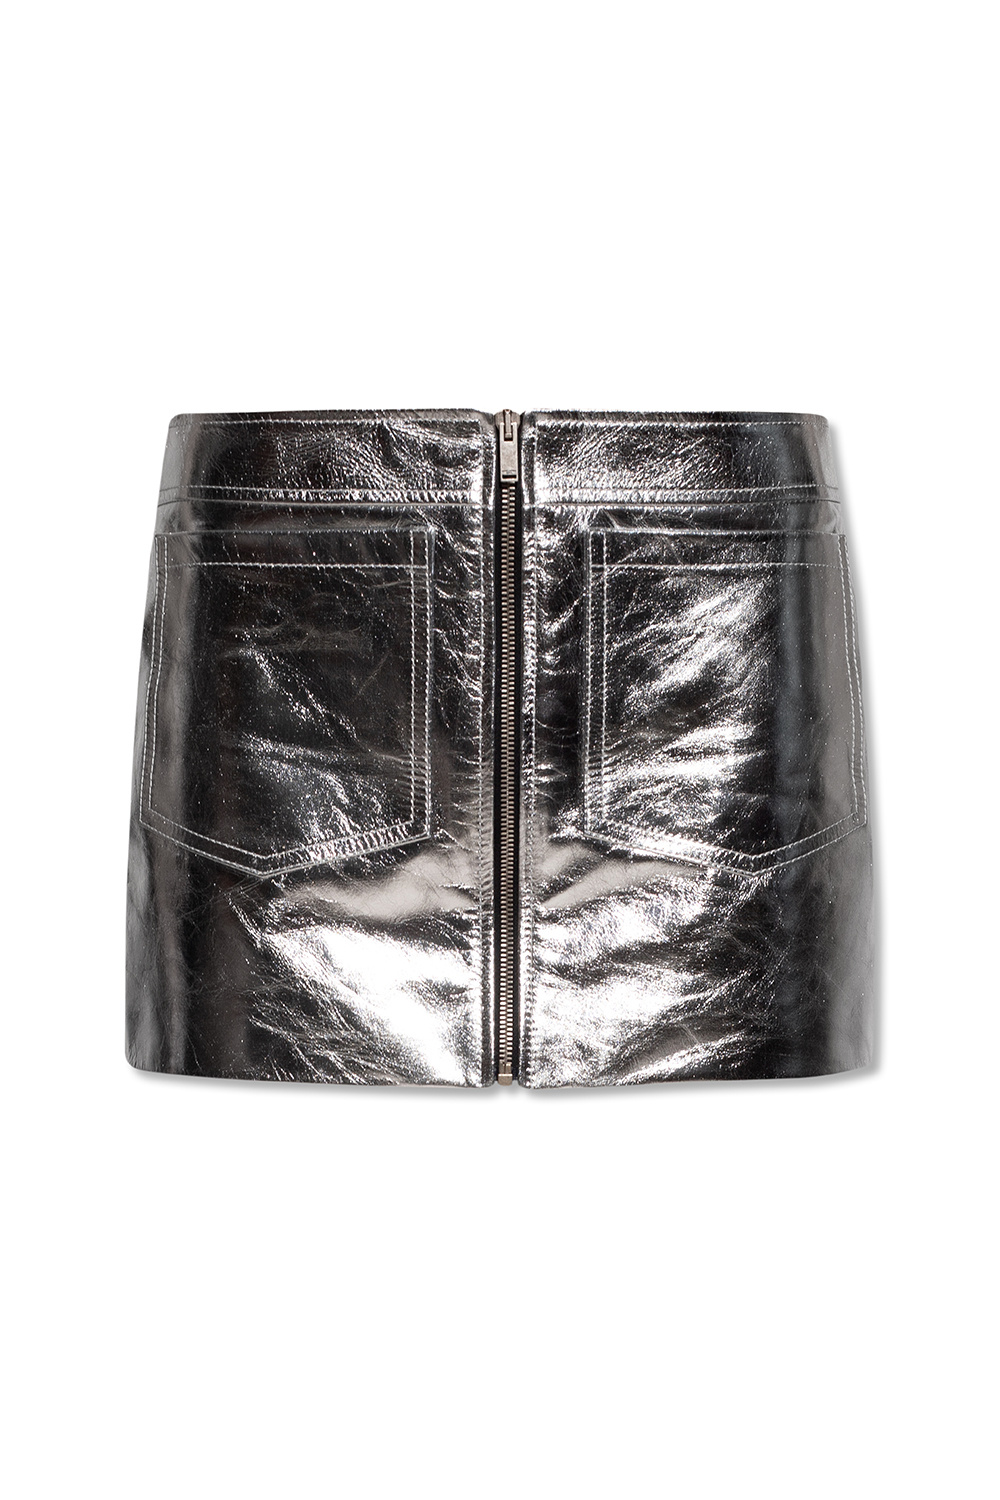 Black Patent-leather mini skirt, SAINT LAURENT